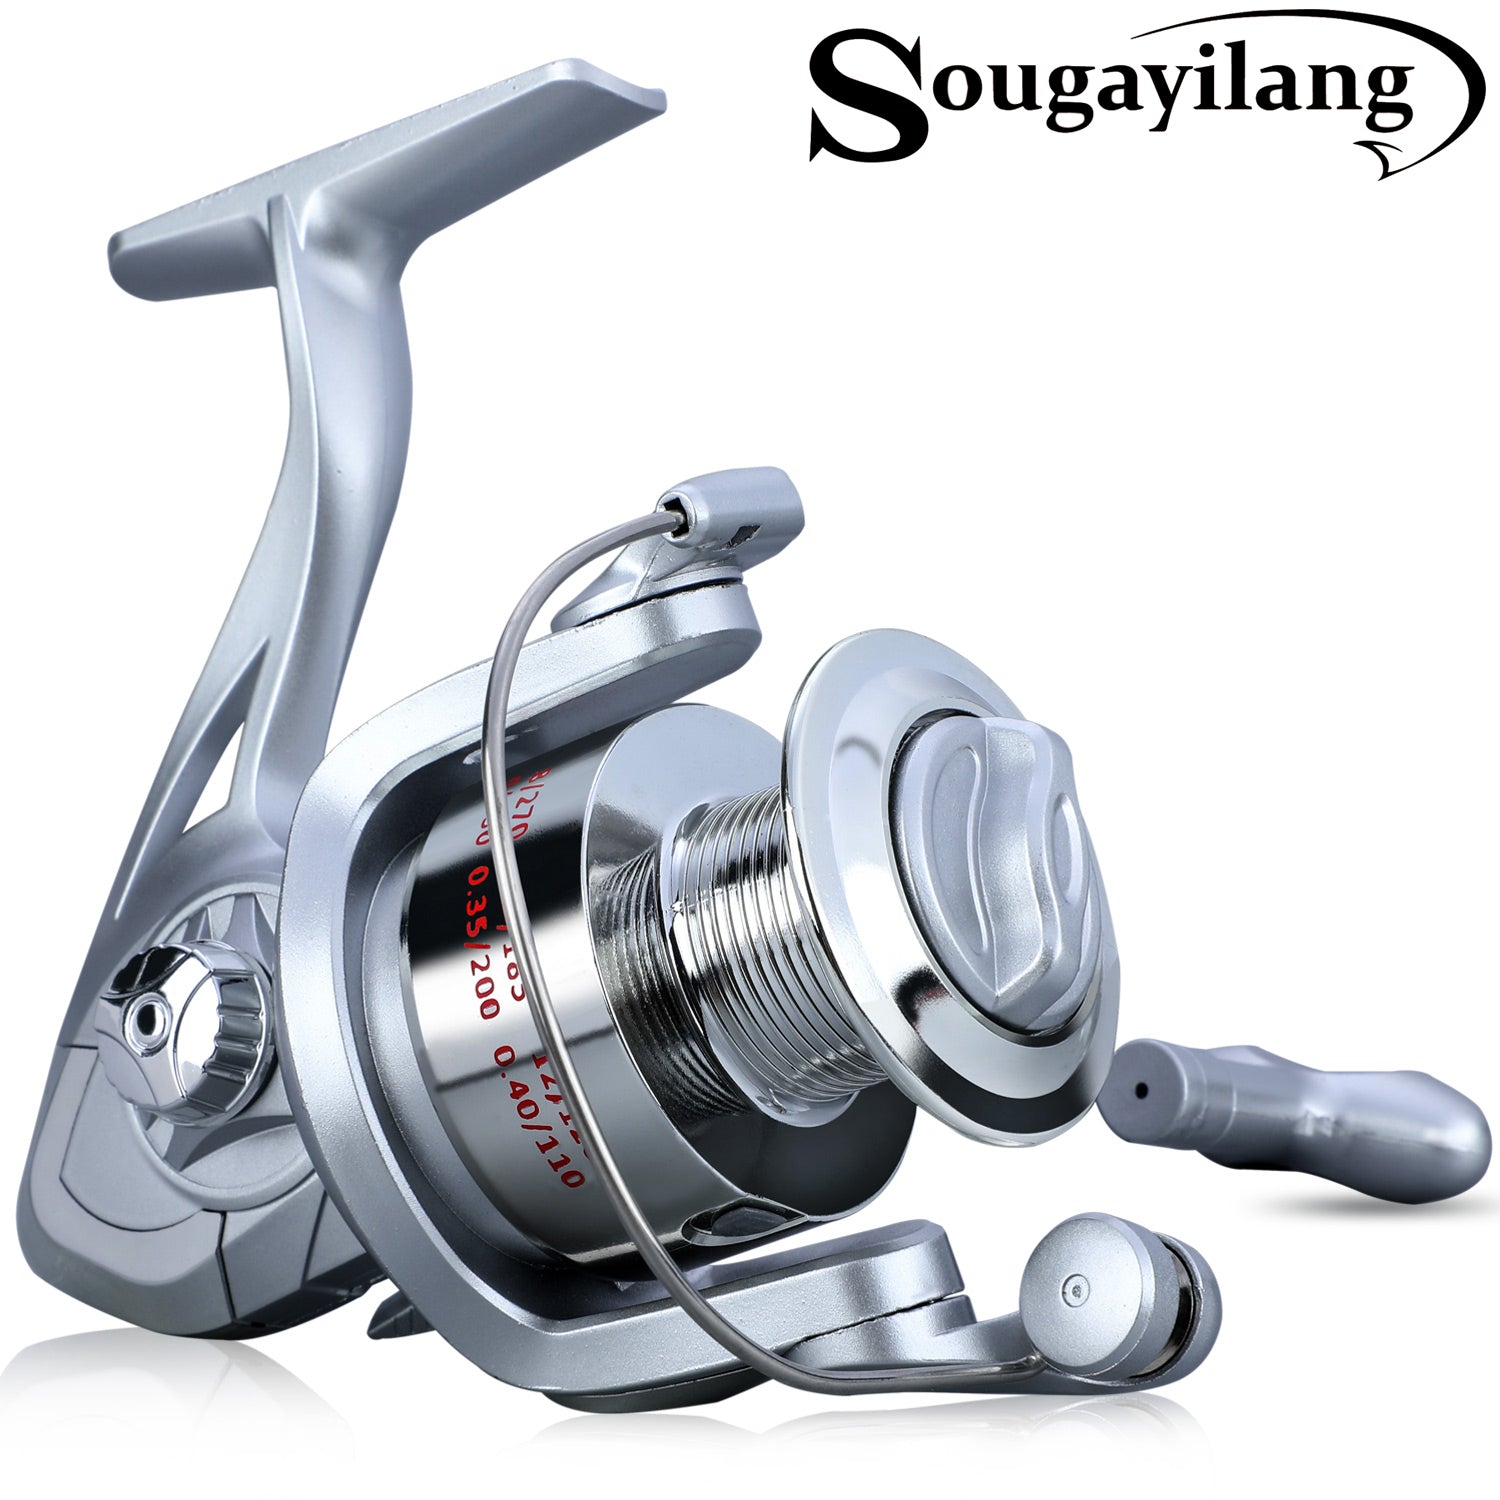 Sougayilang 5.0:1 Spinning Fishing Reel Wooden Handle 1000